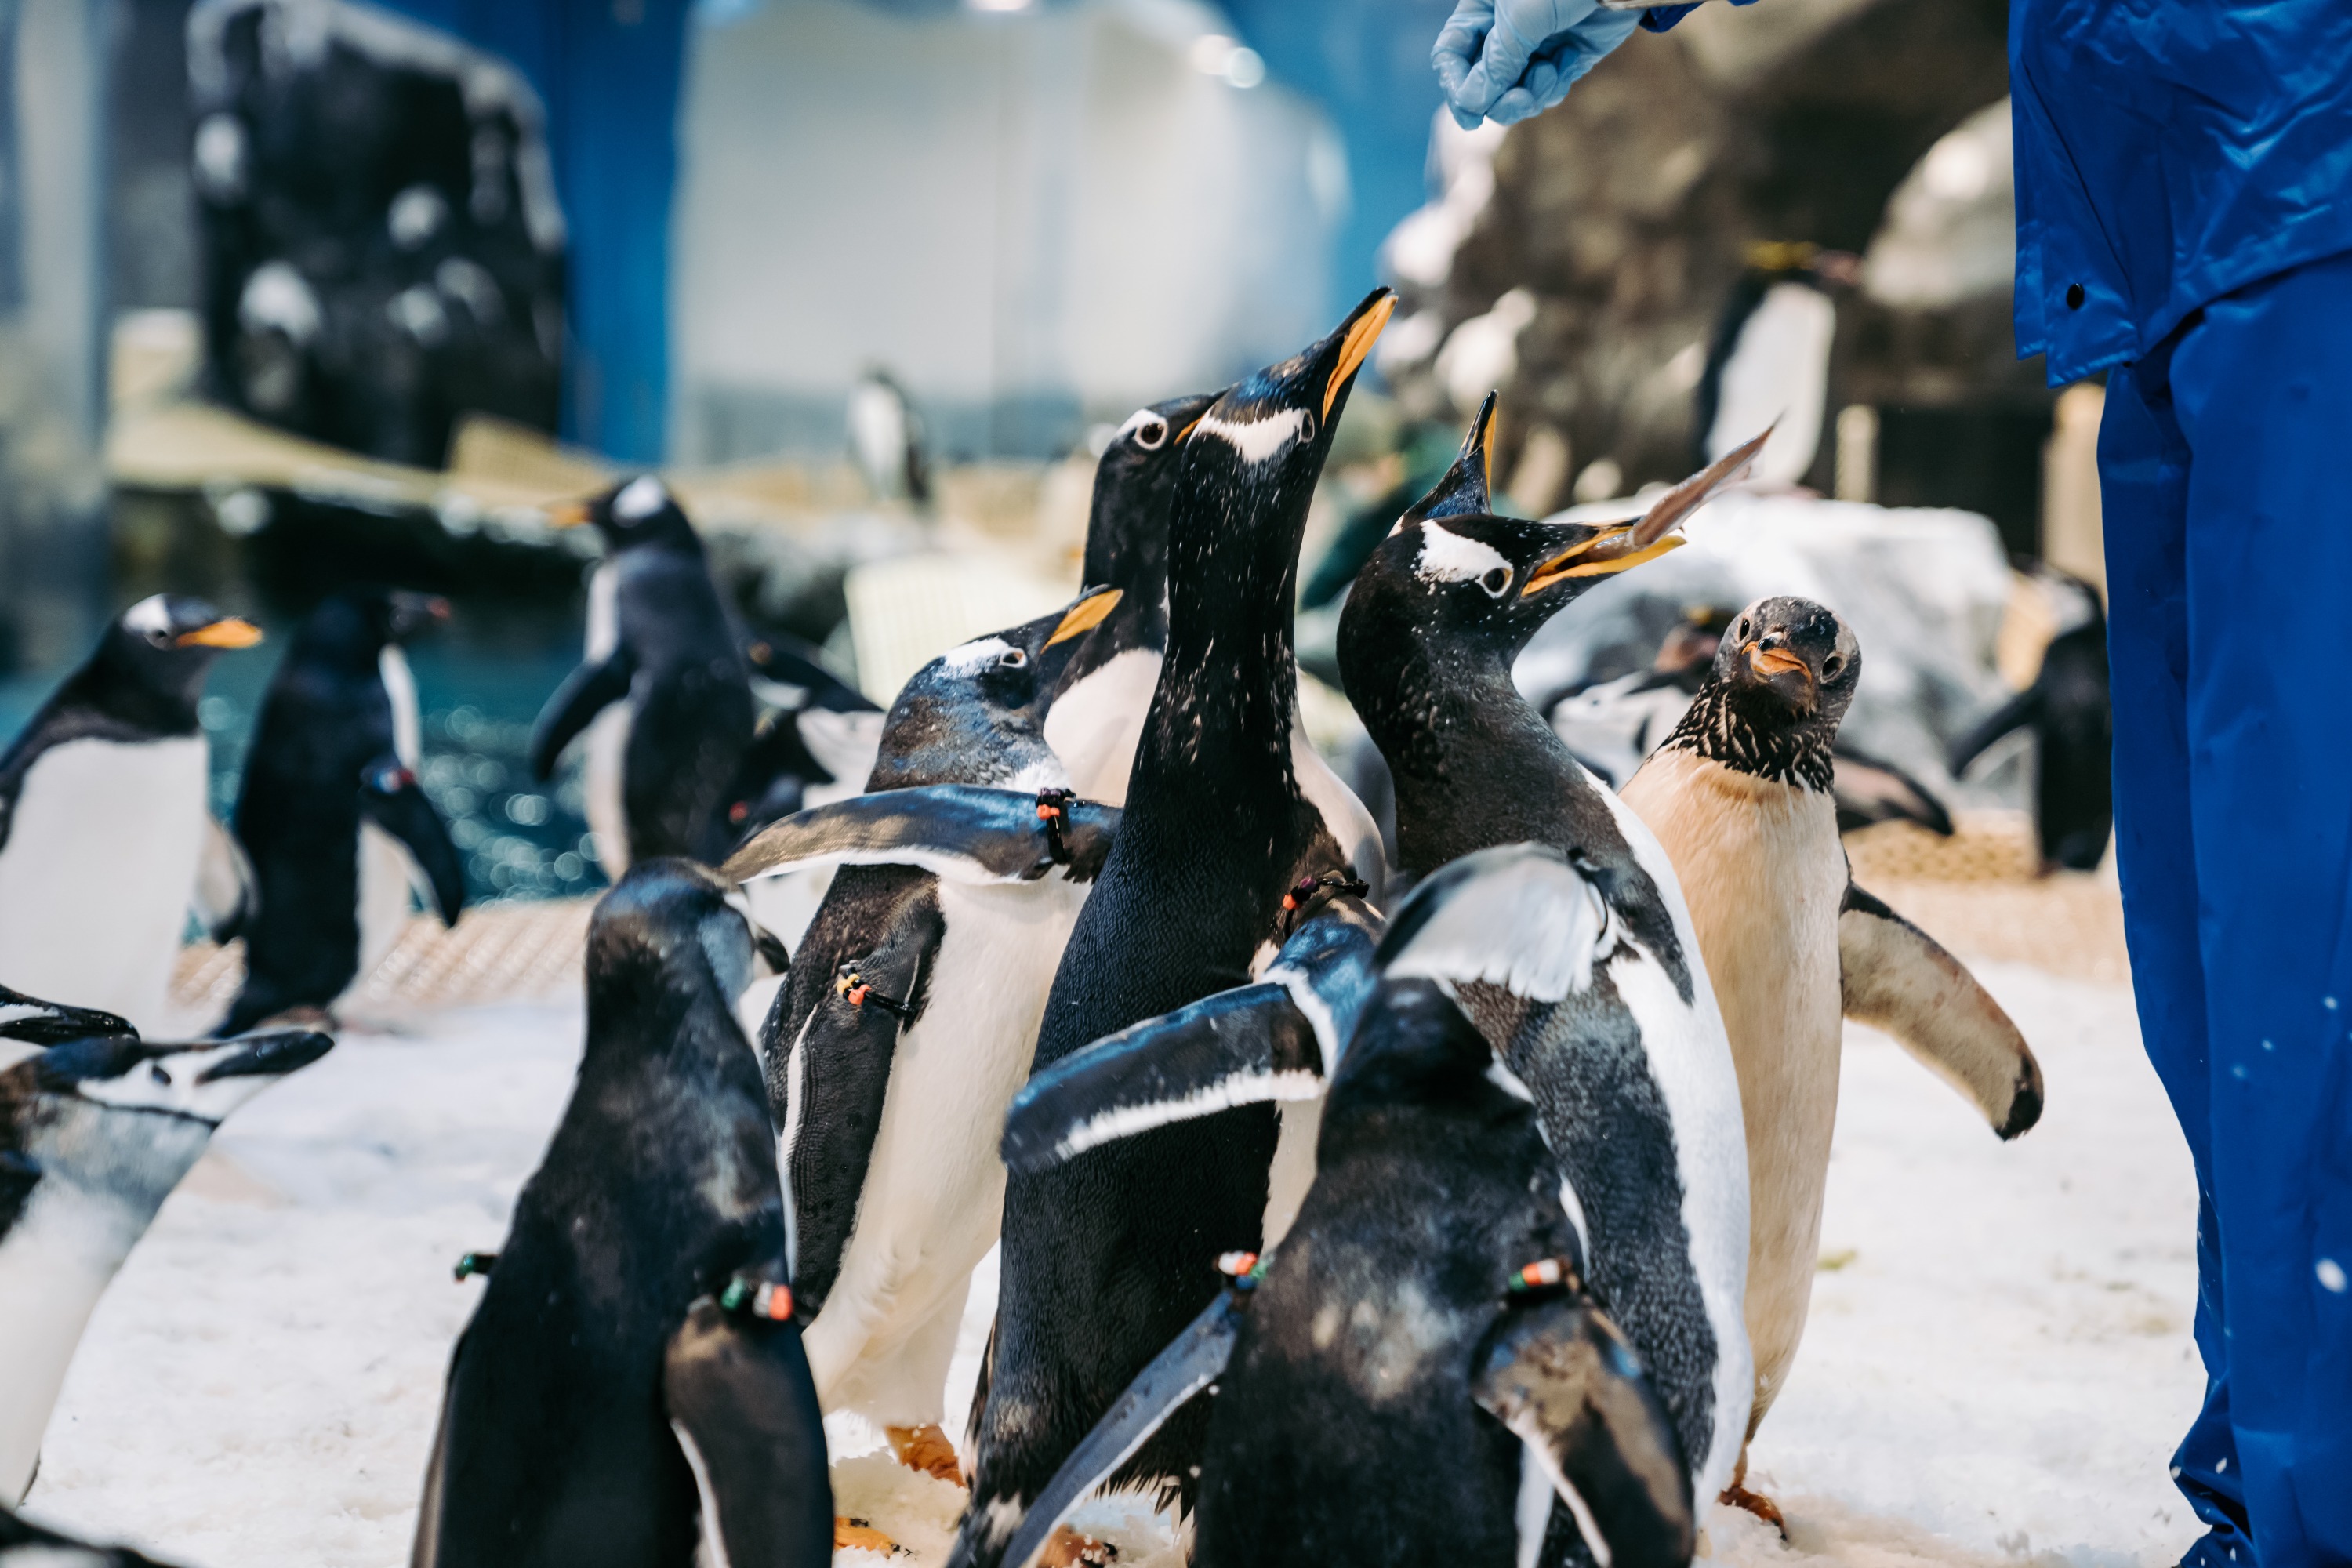 Penguin Encounter at National Museum of Marine Biology & Aquarium